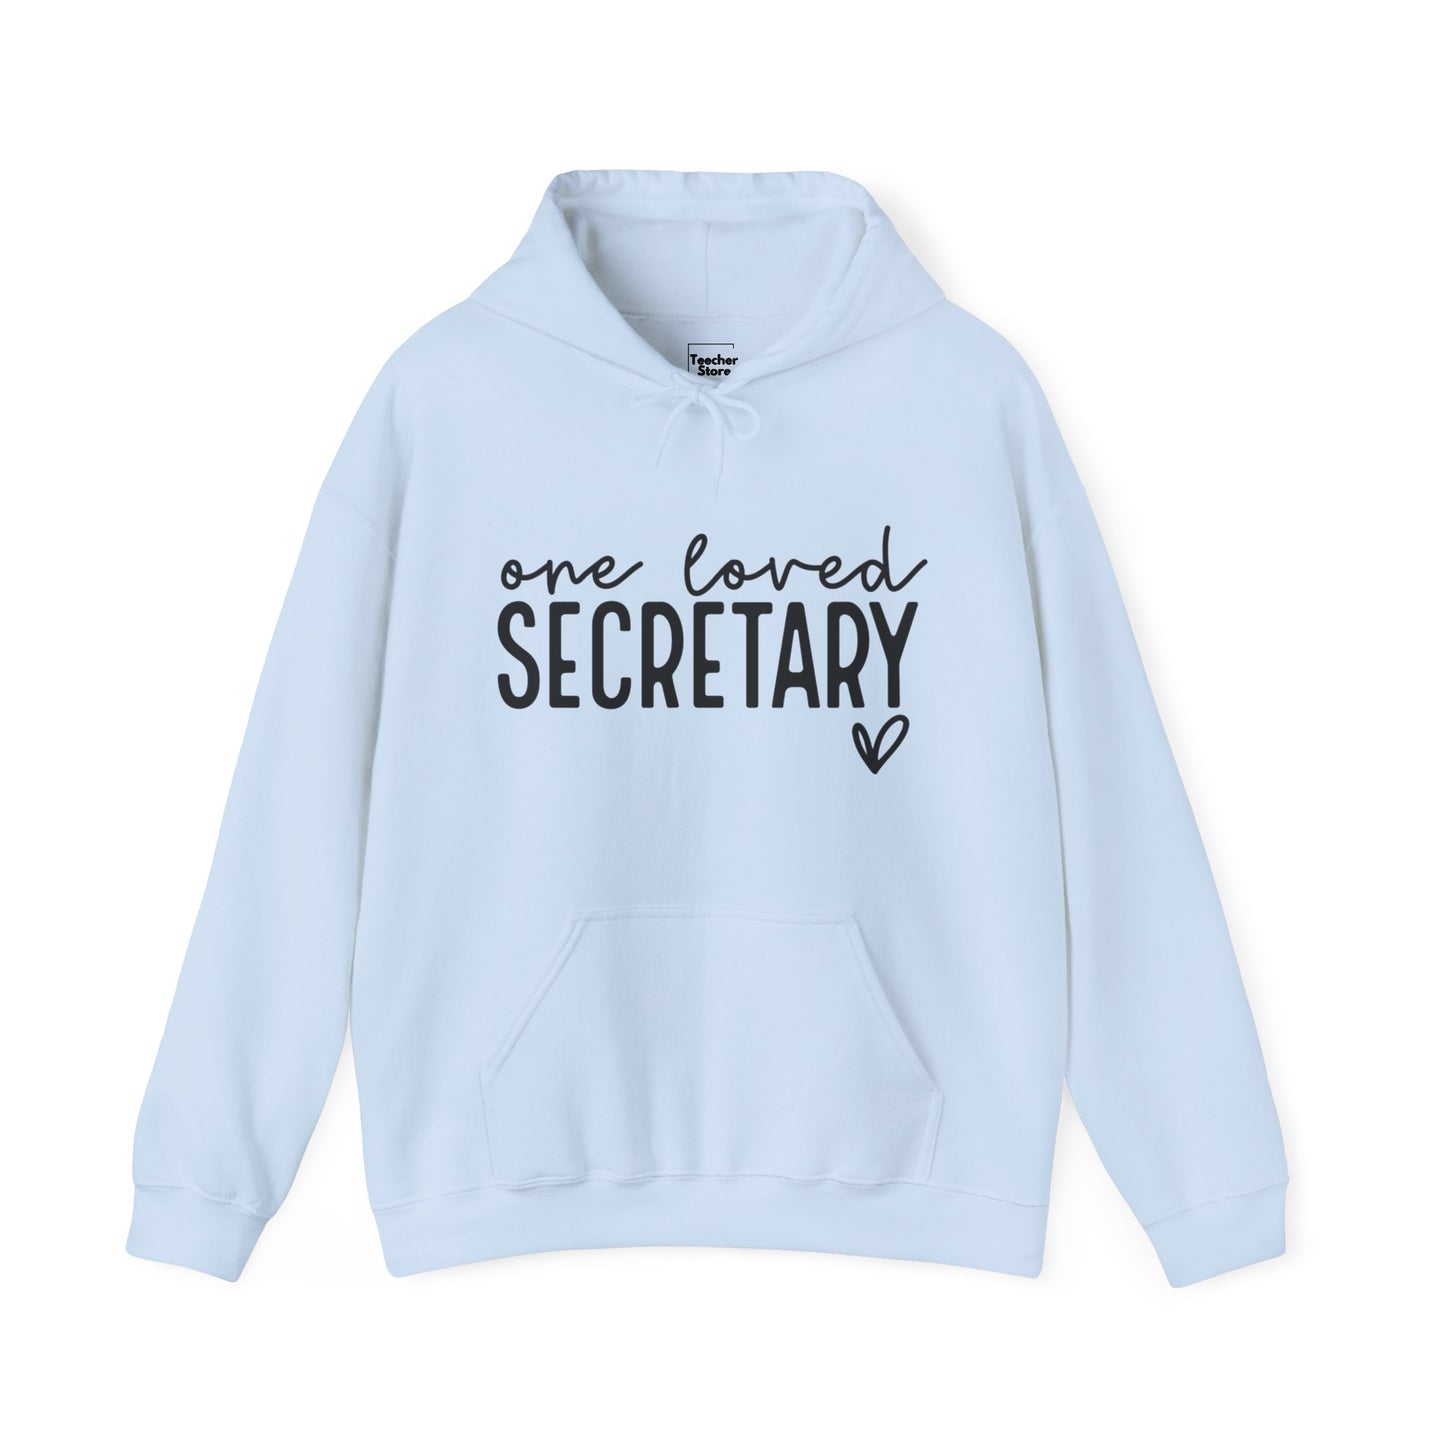 One Loved Secretary Hooded Sweatshirt